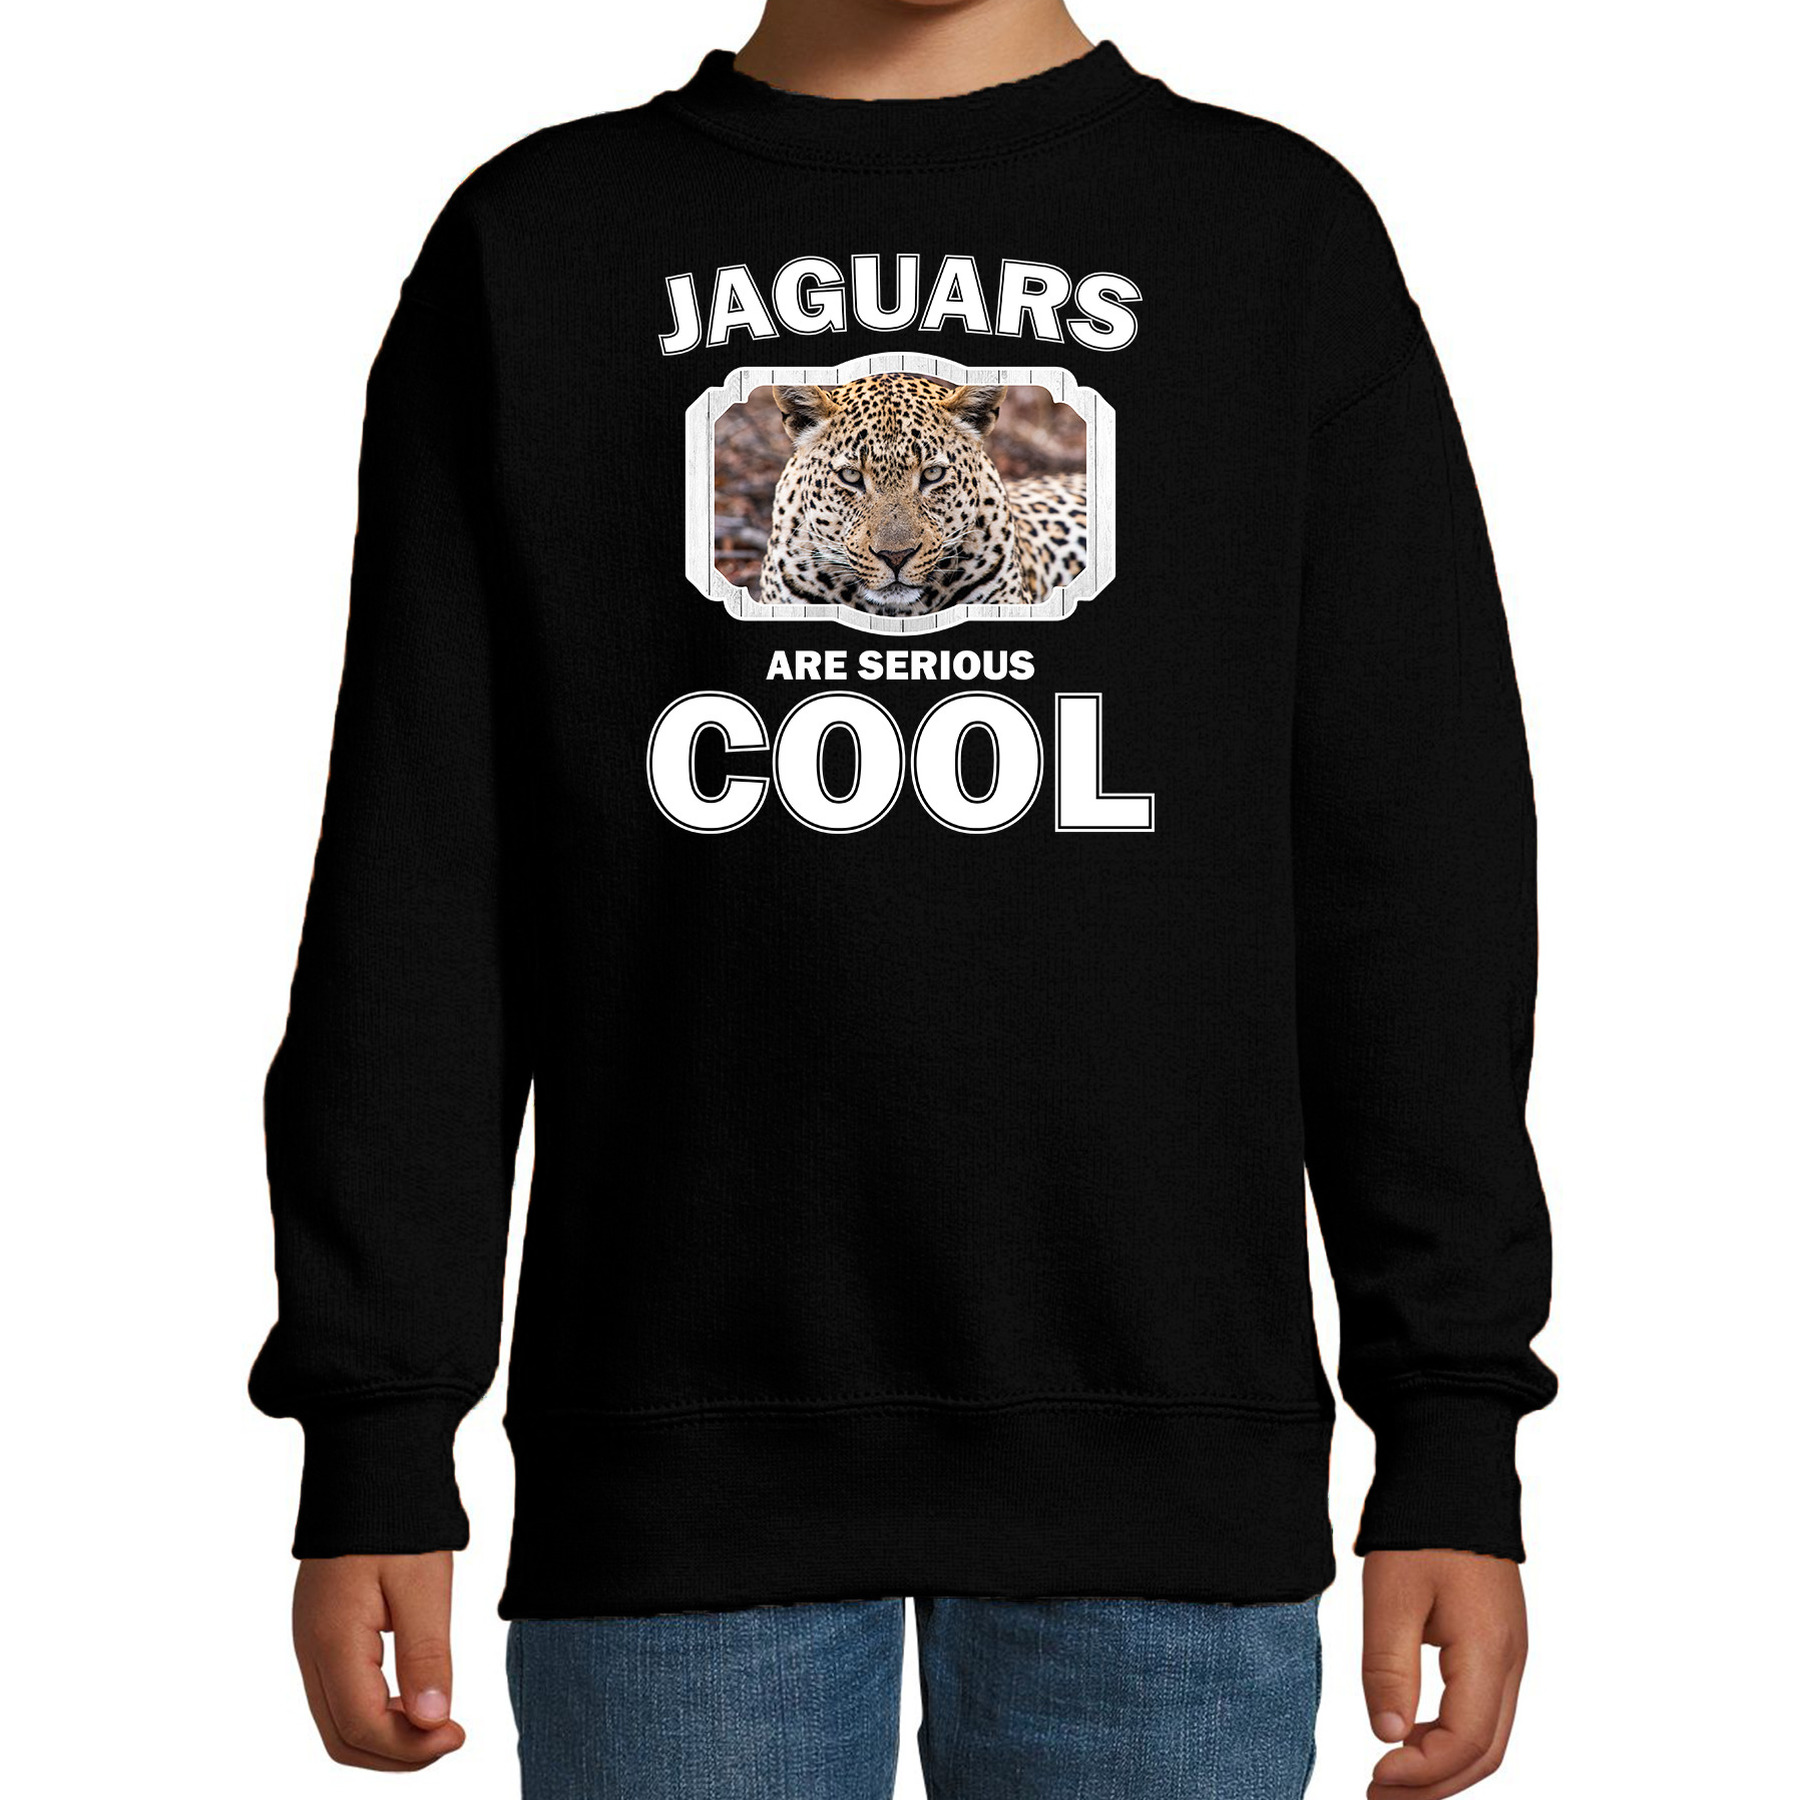 Sweater jaguars are serious cool zwart kinderen - jaguars/ jaguar trui